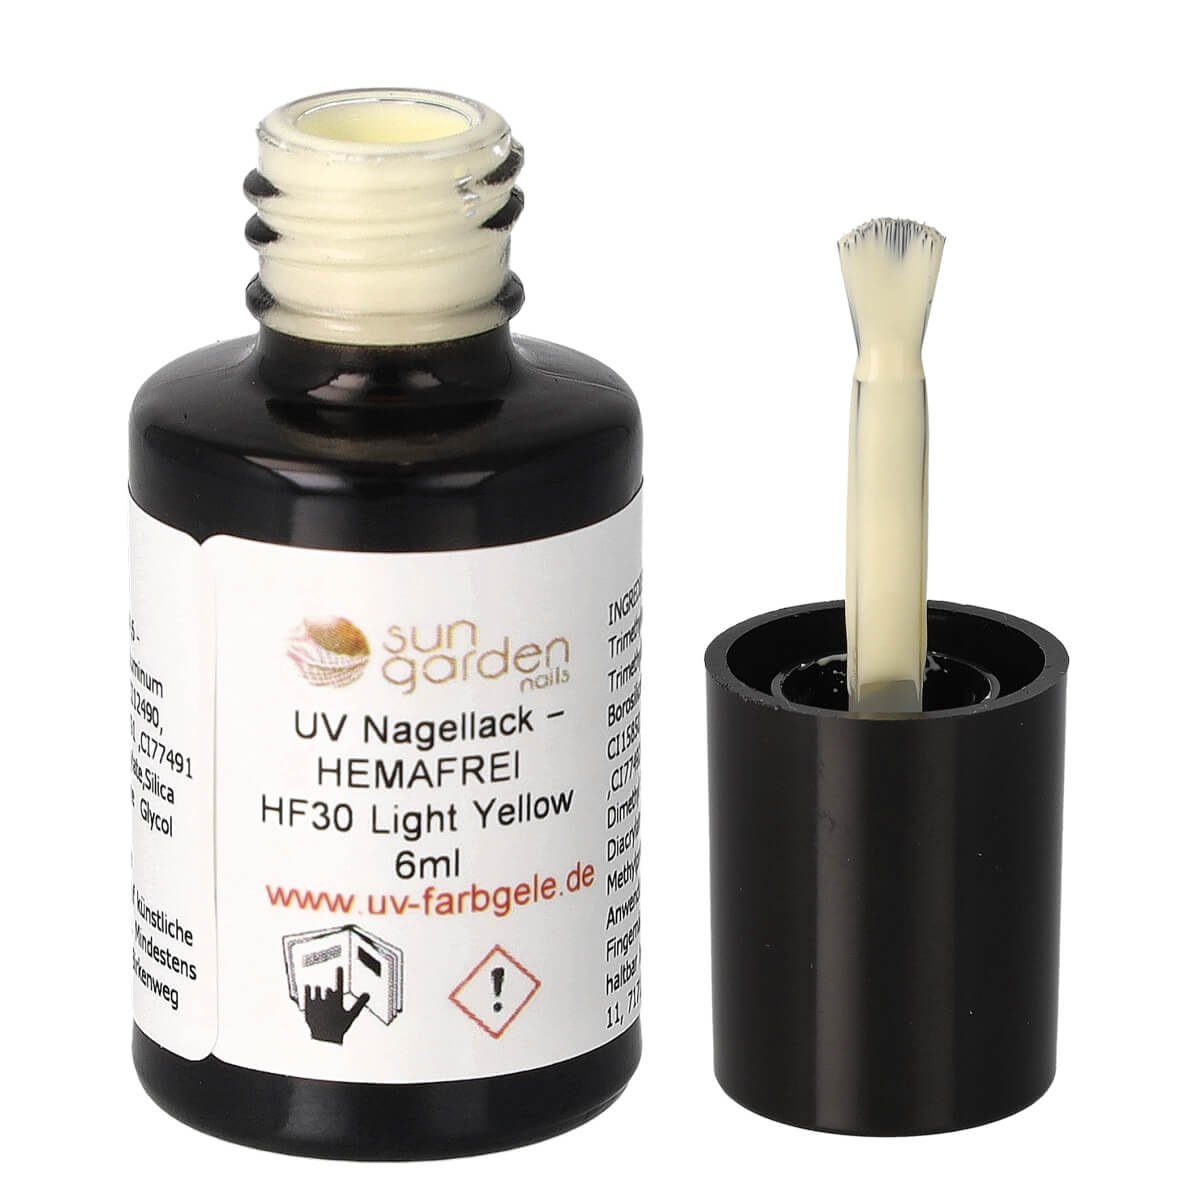 HEMAFREI HF30 – Nails Sun Garden Yellow 6ml Nagellack - Nagellack UV Light